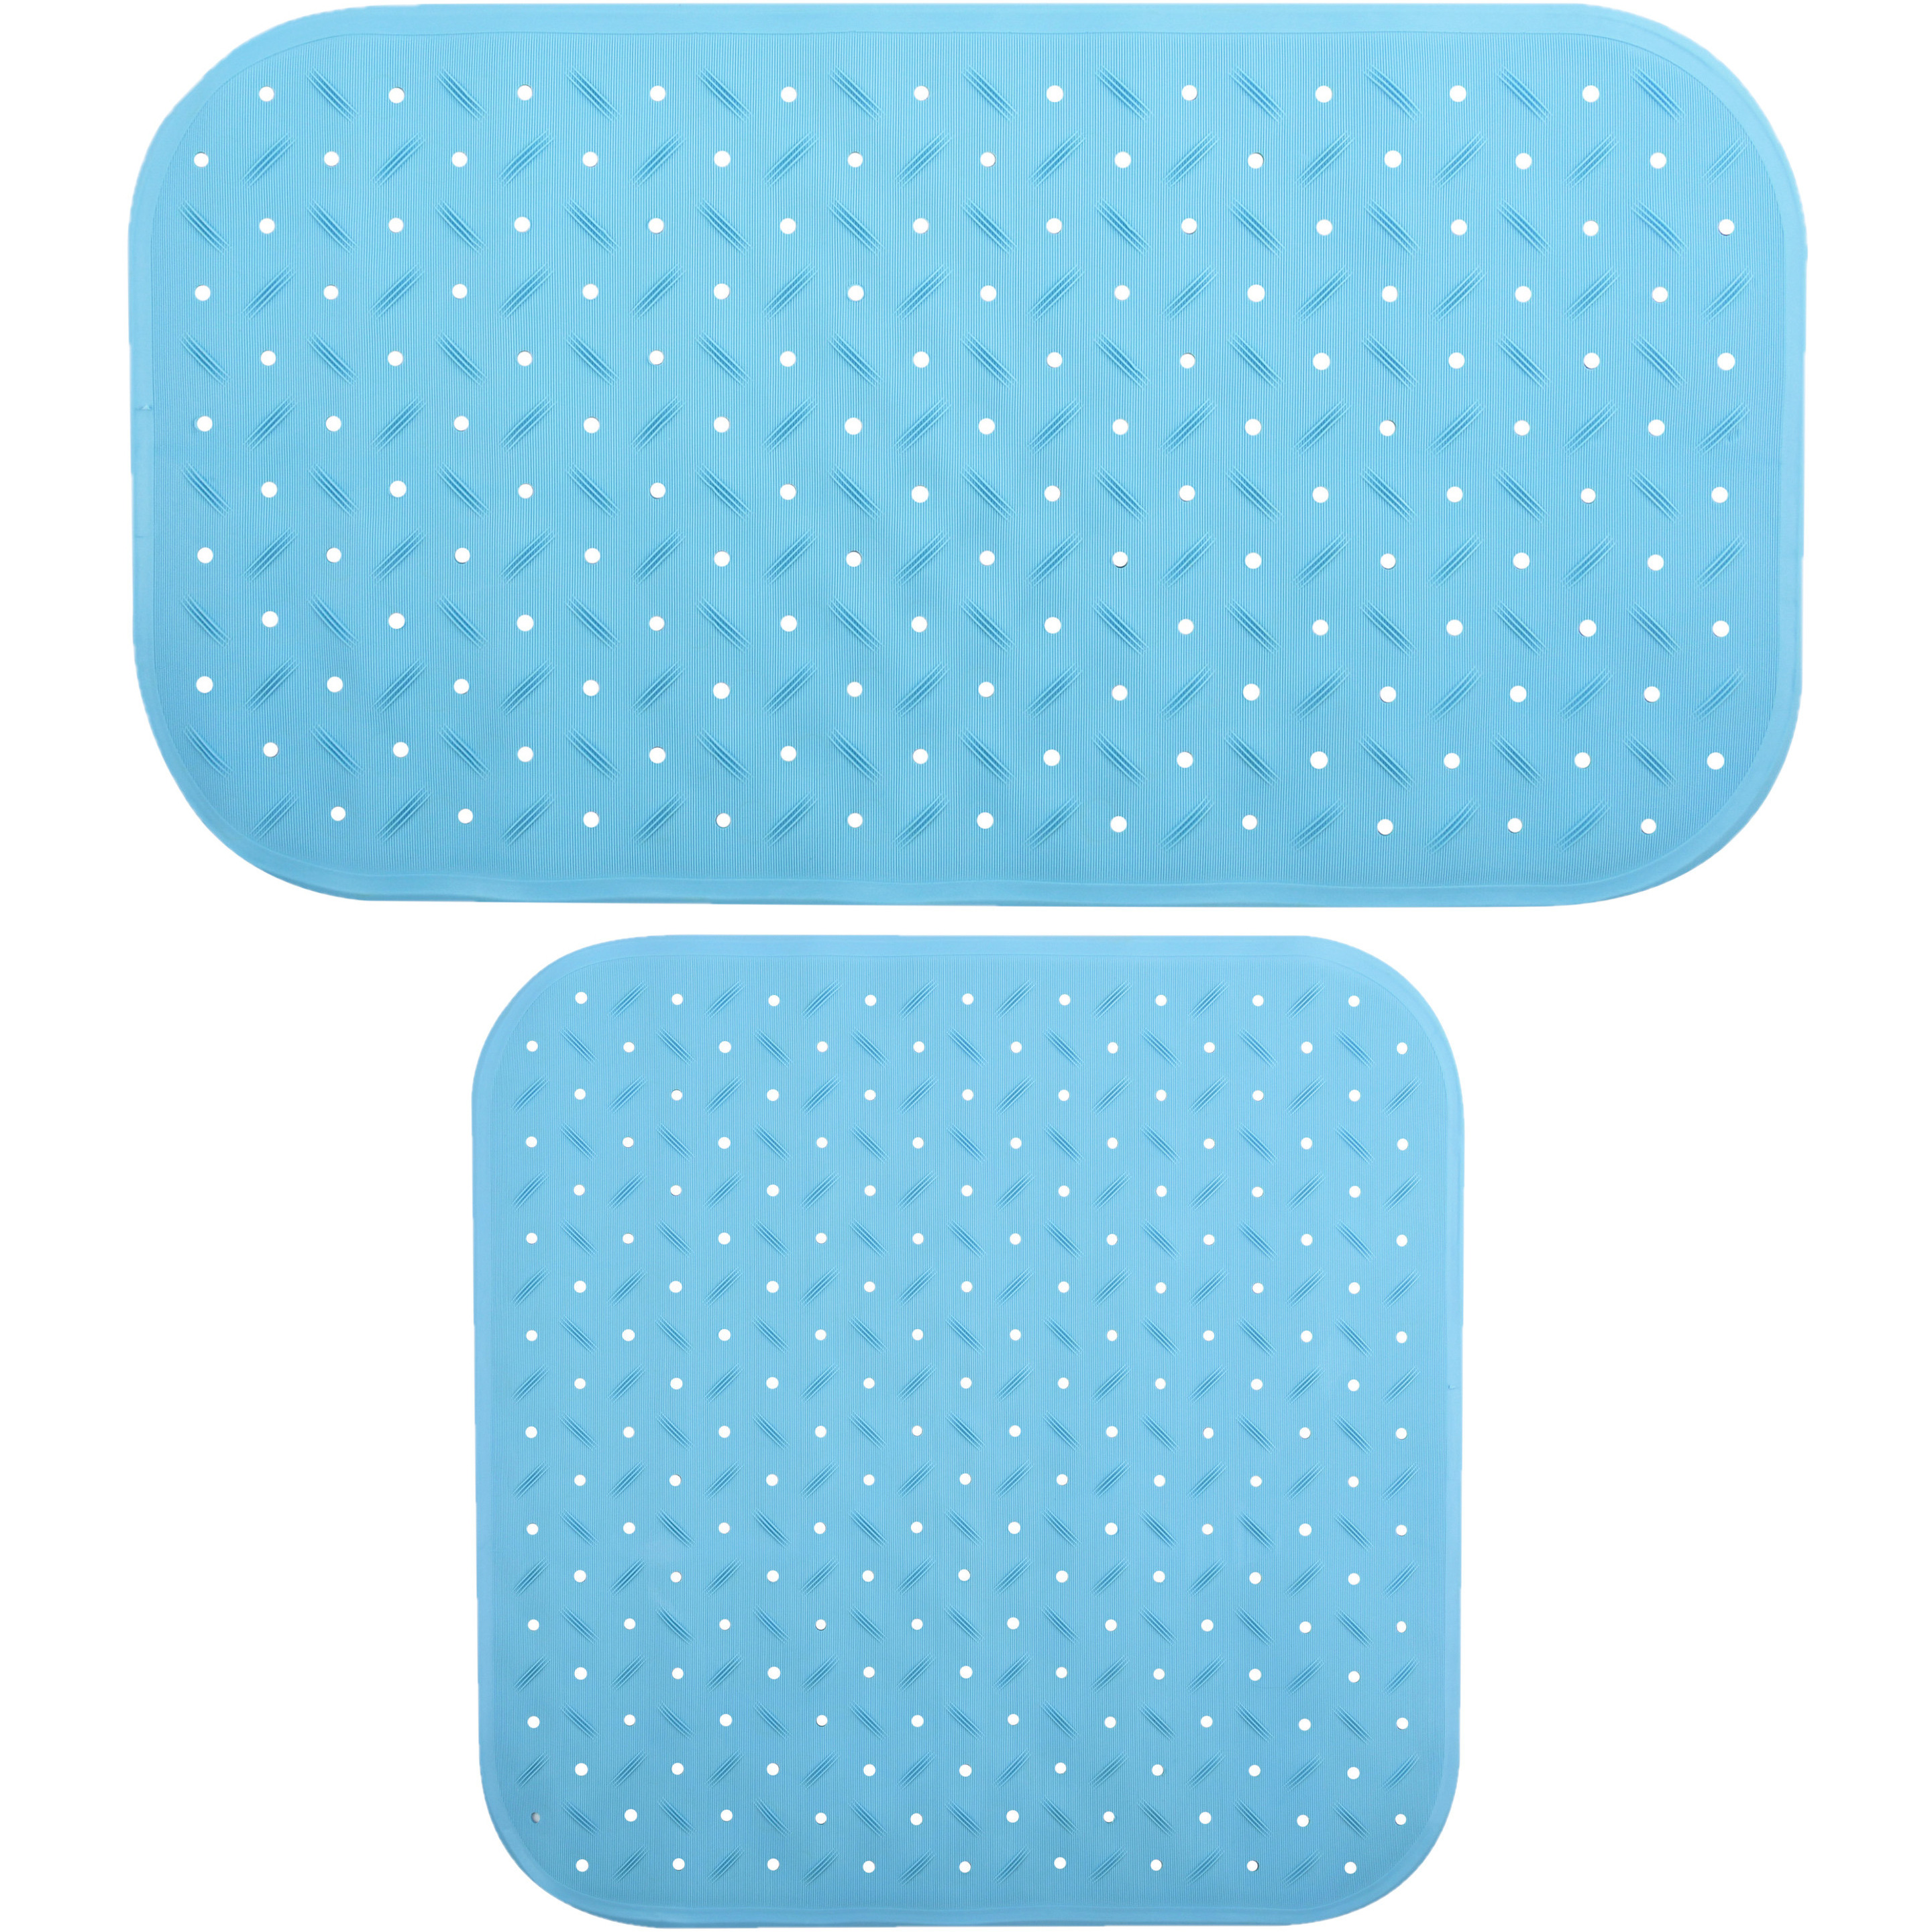 MSV Douche-bad anti-slip matten set badkamer rubber 2x stuks lichtblauw 2 formaten